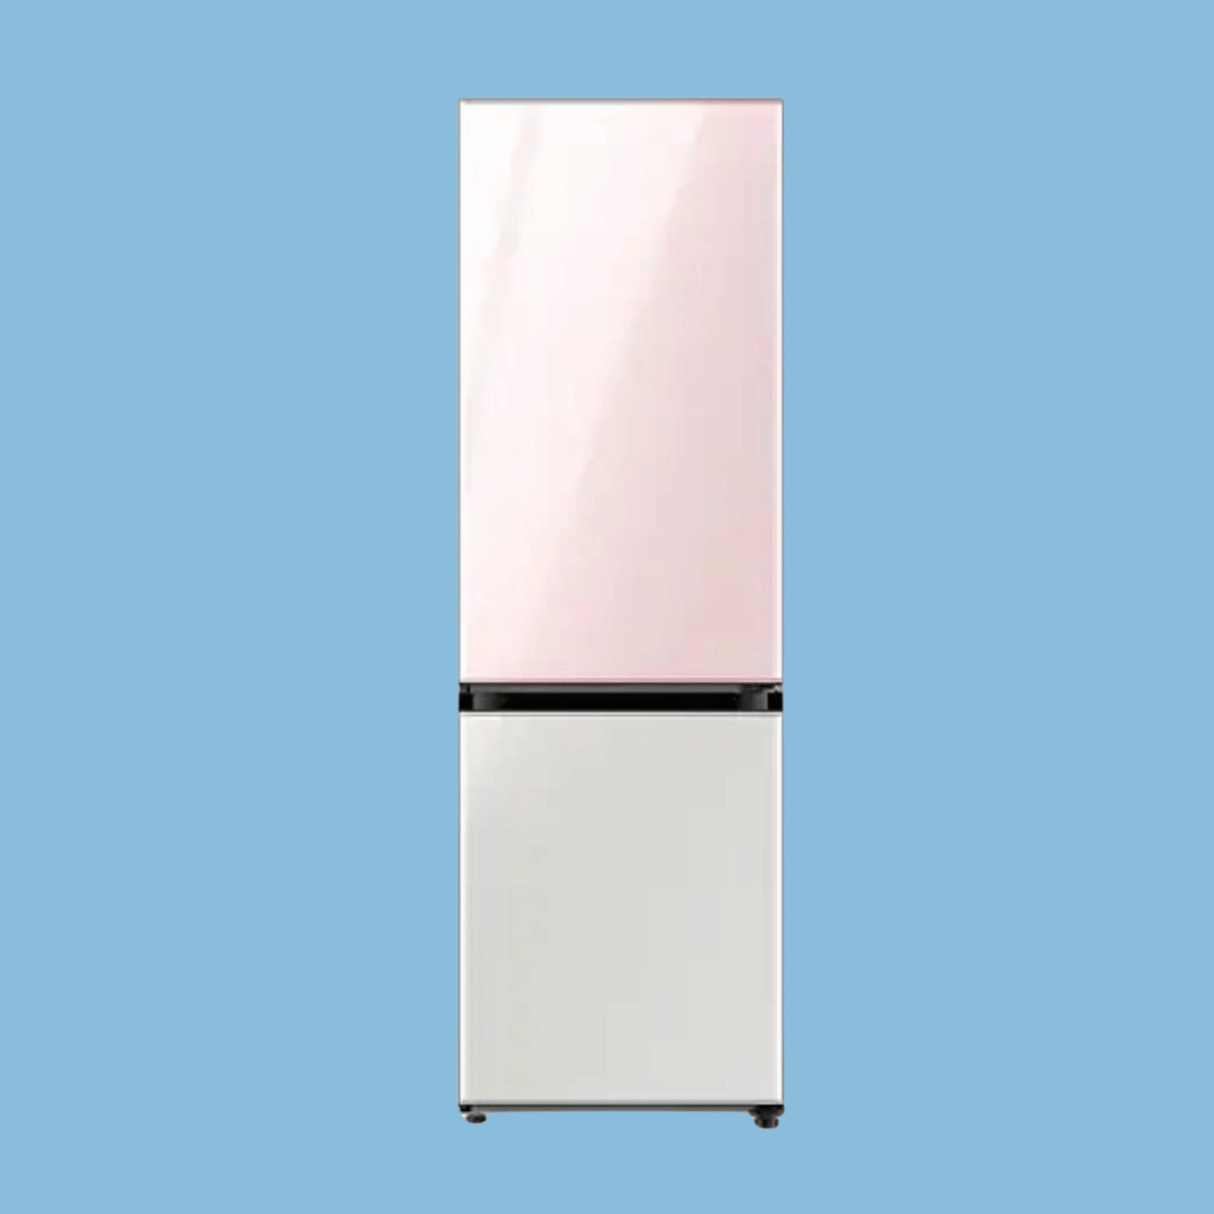 Samsung 339L Fridge RB33T307029; Bespoke 2-Door Bottom Freezer Refrigerator, White / Pink